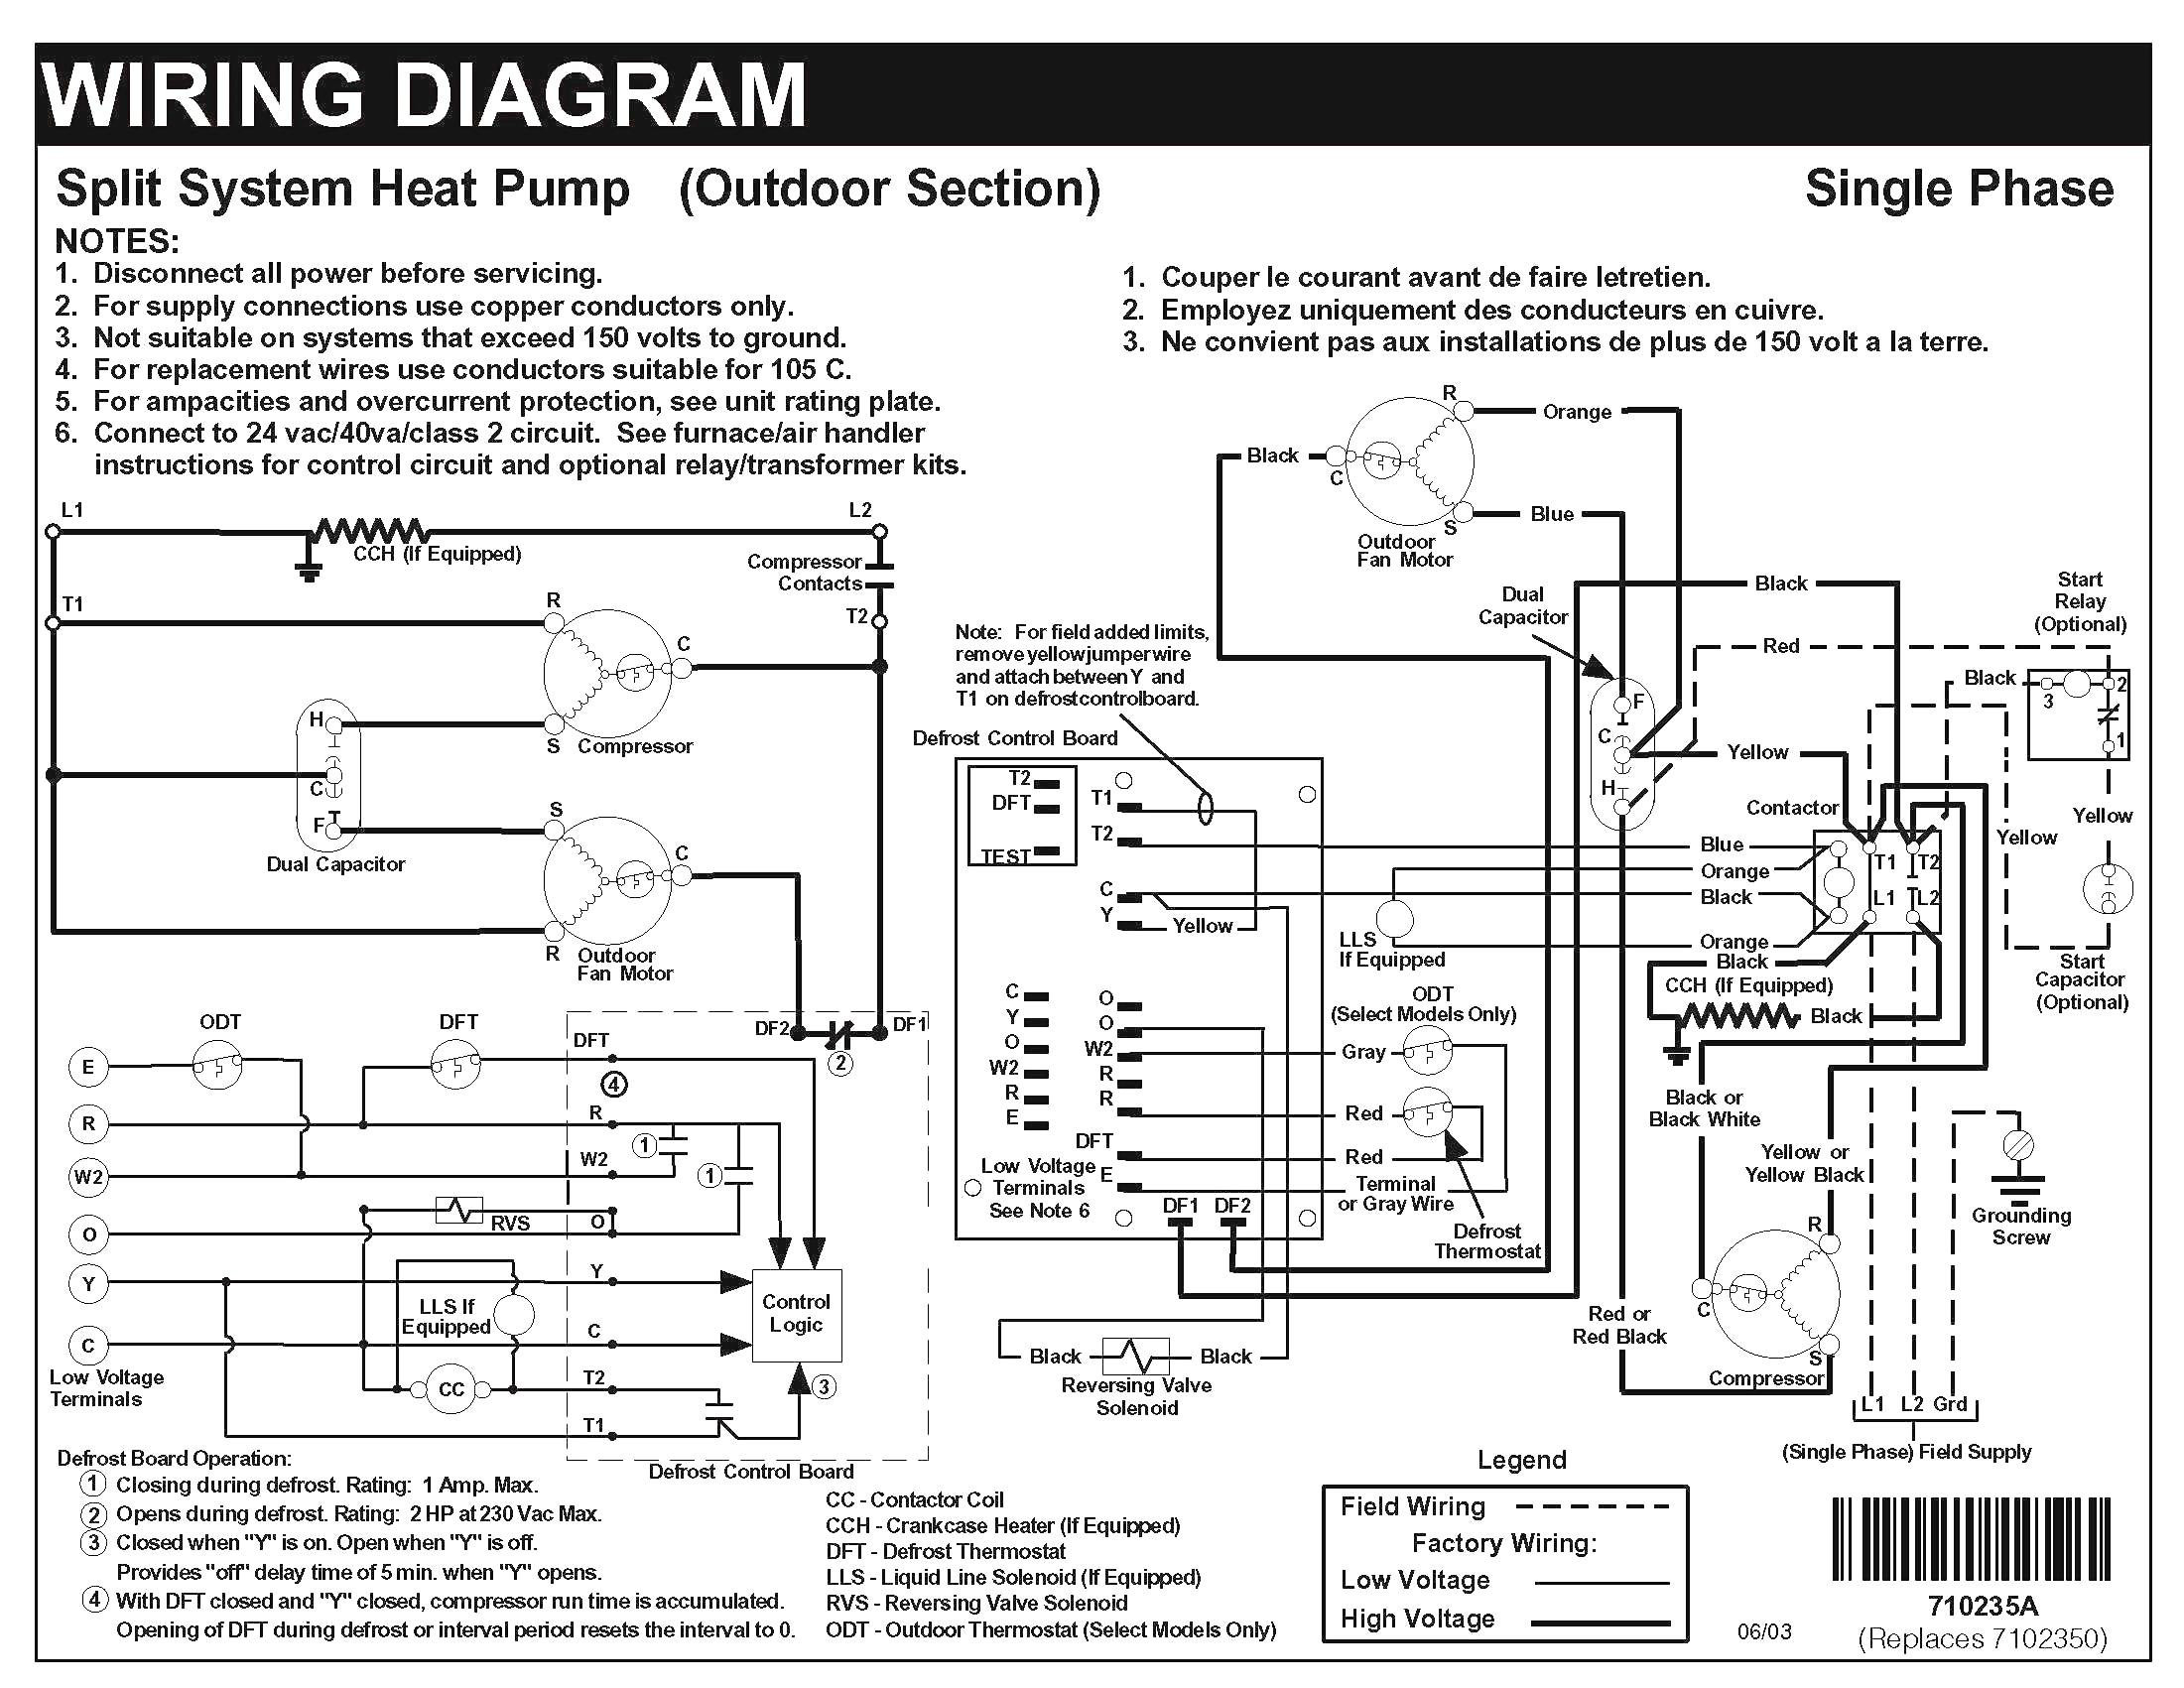 Lennox 51m33 Wiring Diagram Gallery | Wiring Diagram Sample